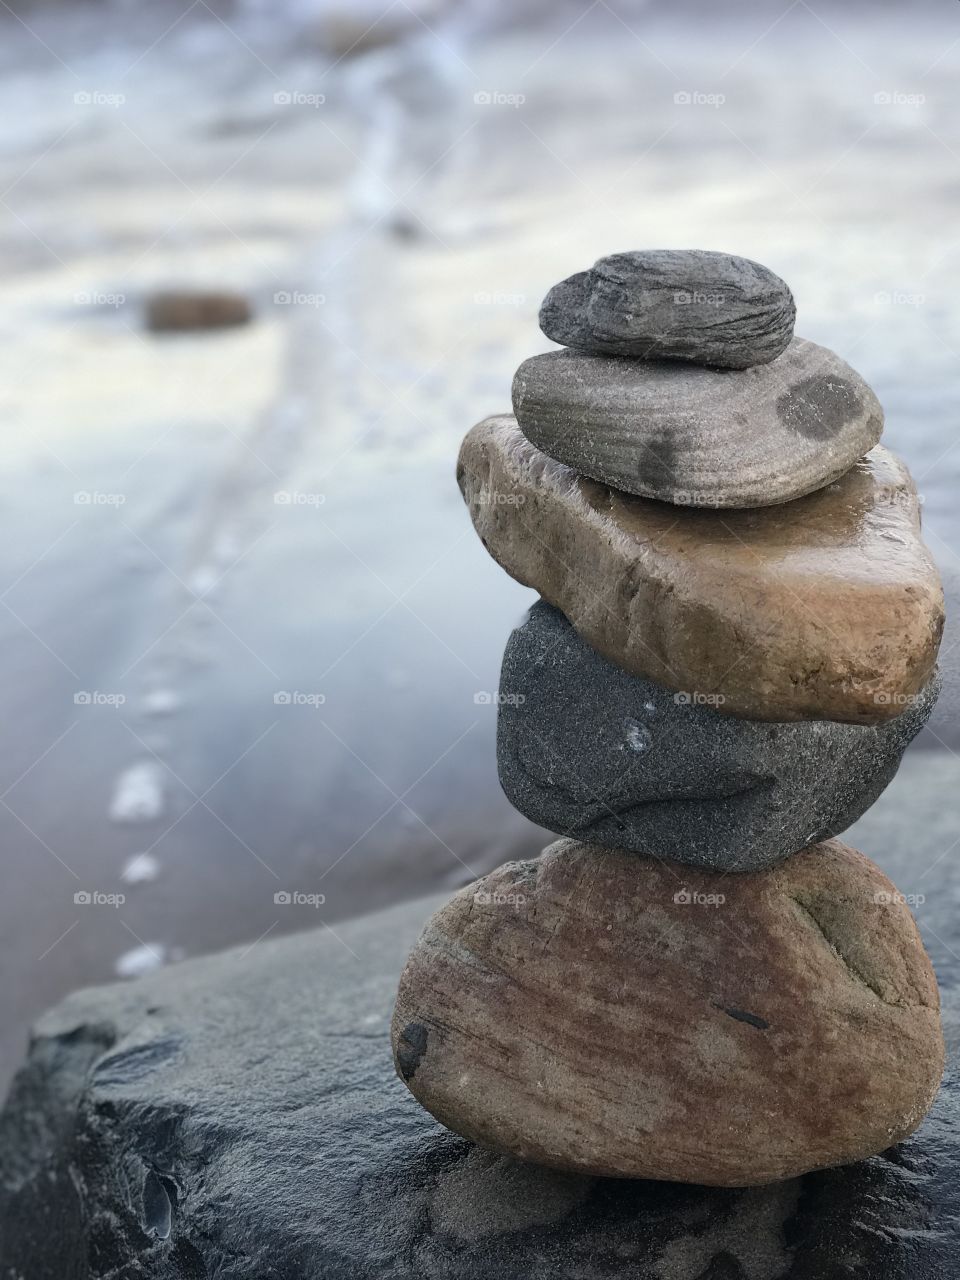 Pebbles on the beach 